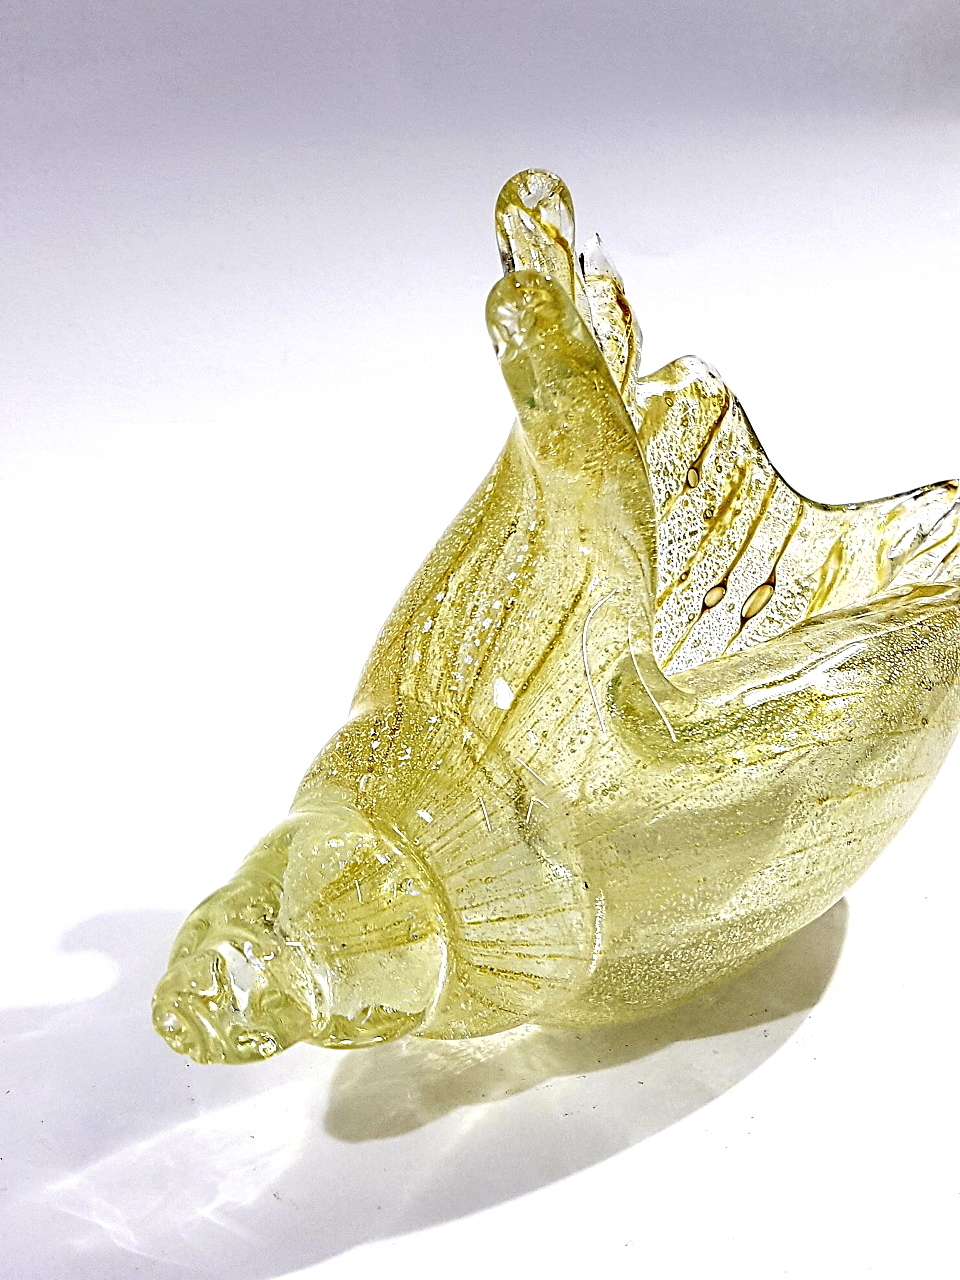 Vaso oro a conchiglia in poliresina 19x13x25cm - Nardini Forniture